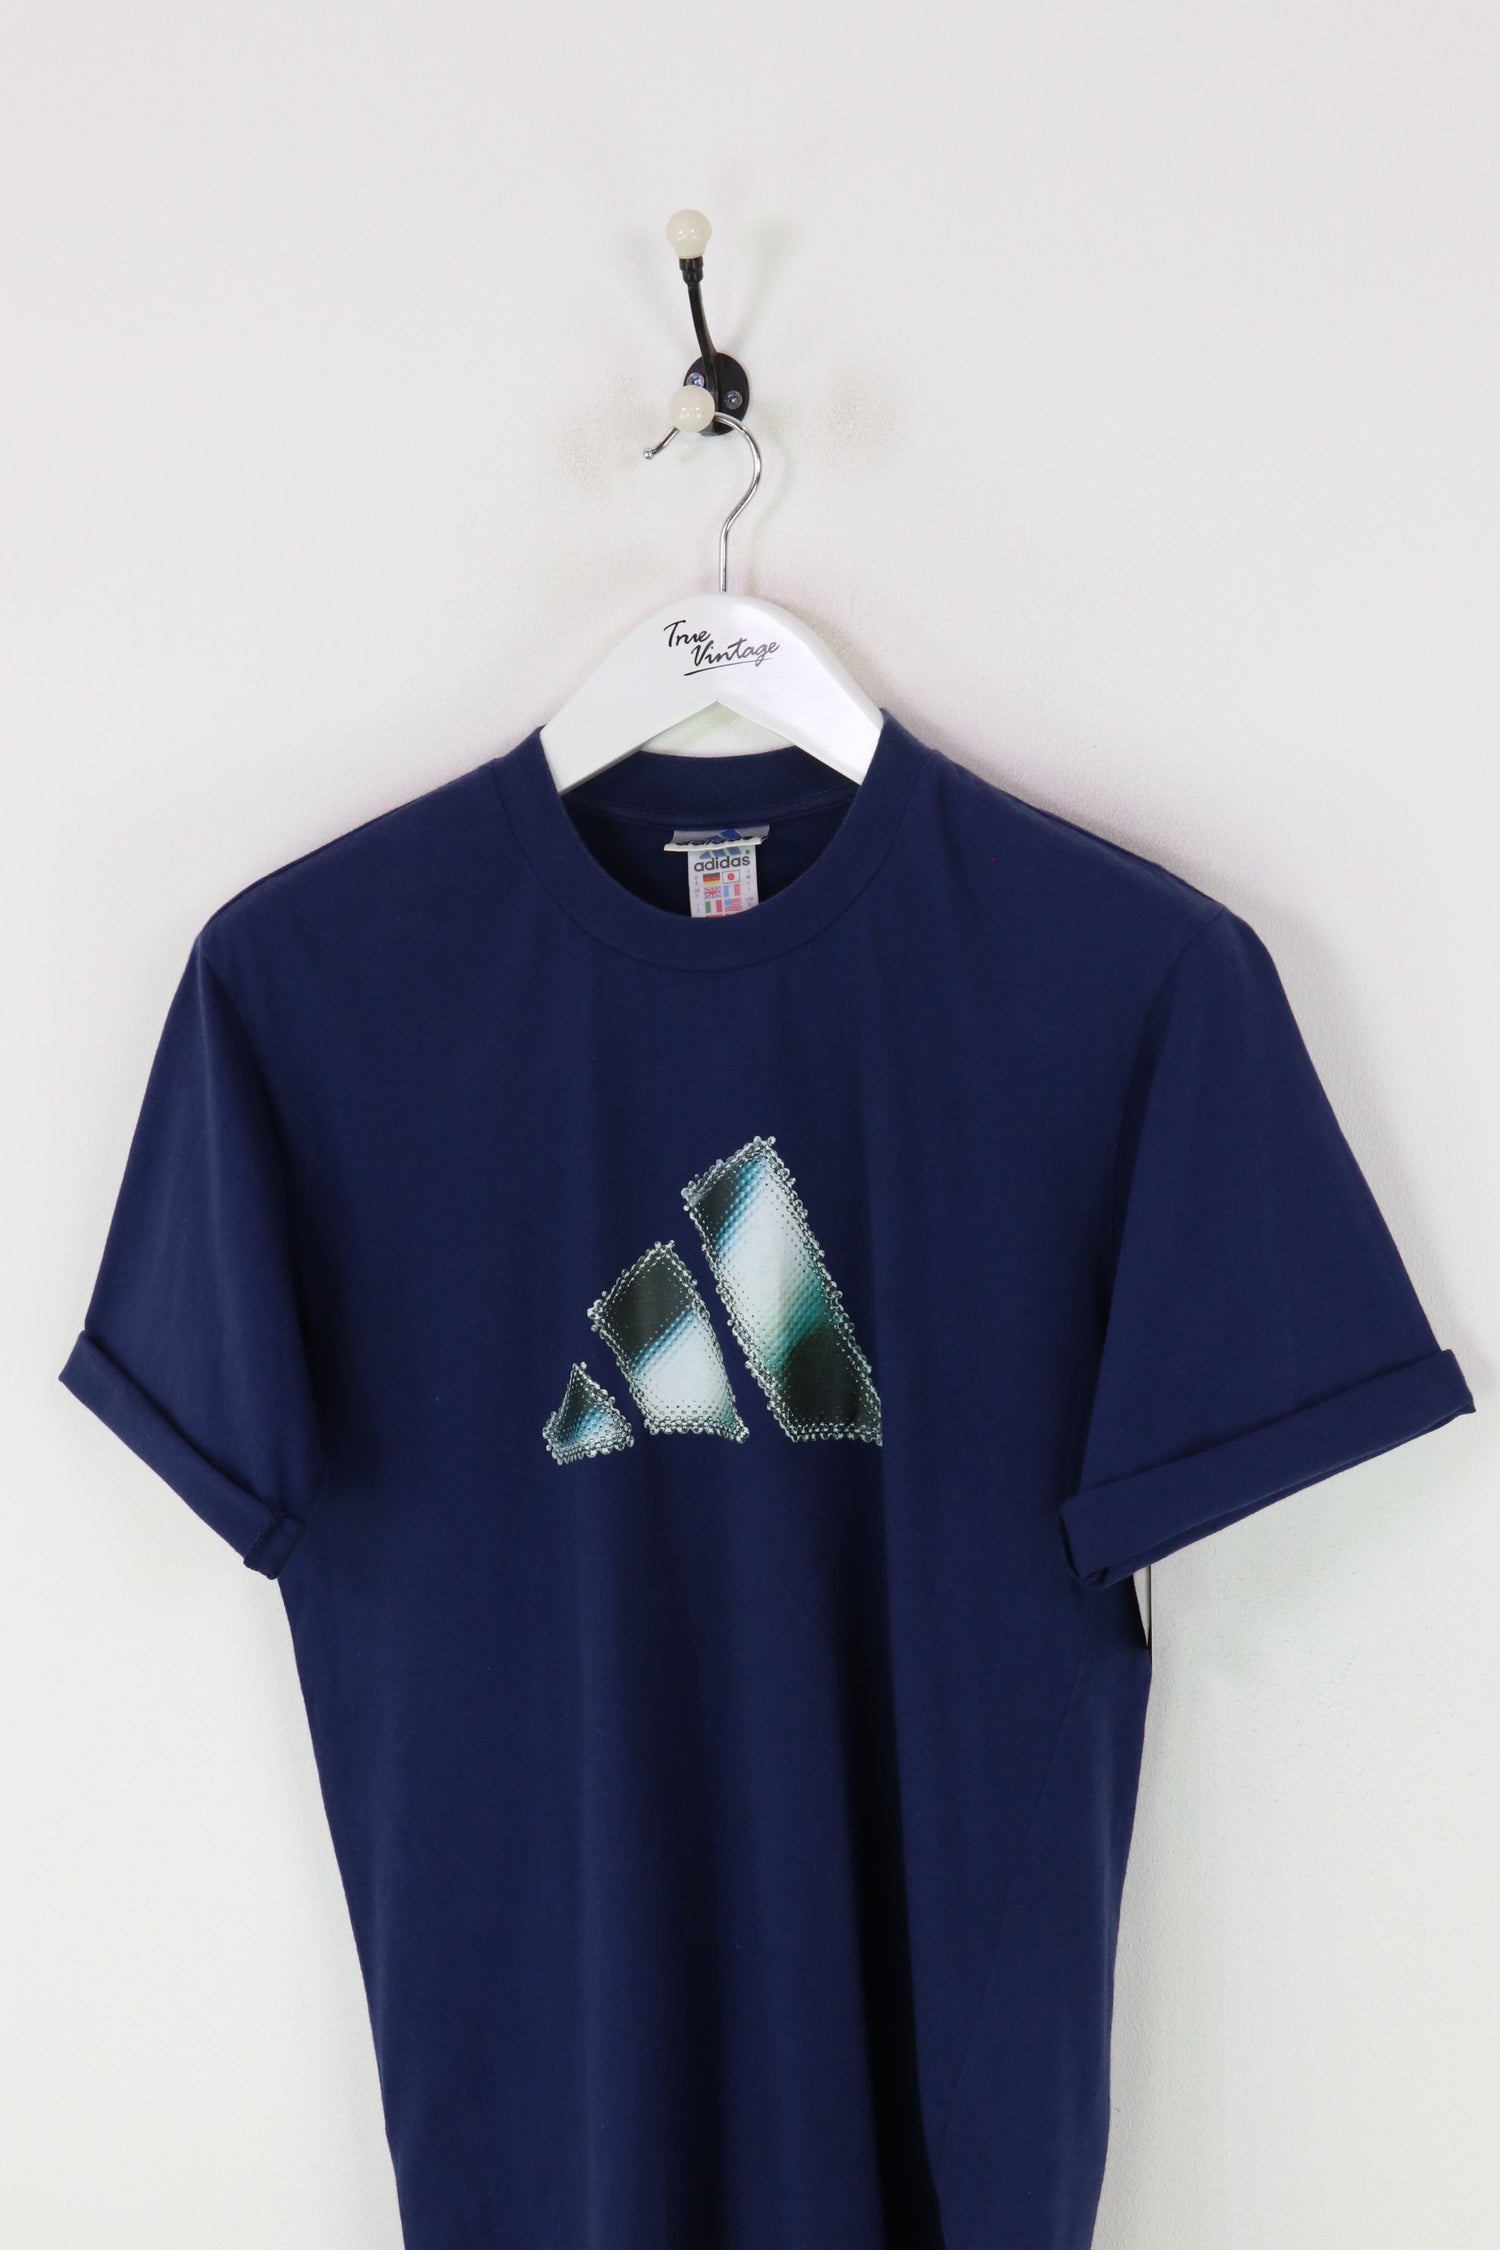 Adidas T-shirt Navy Medium